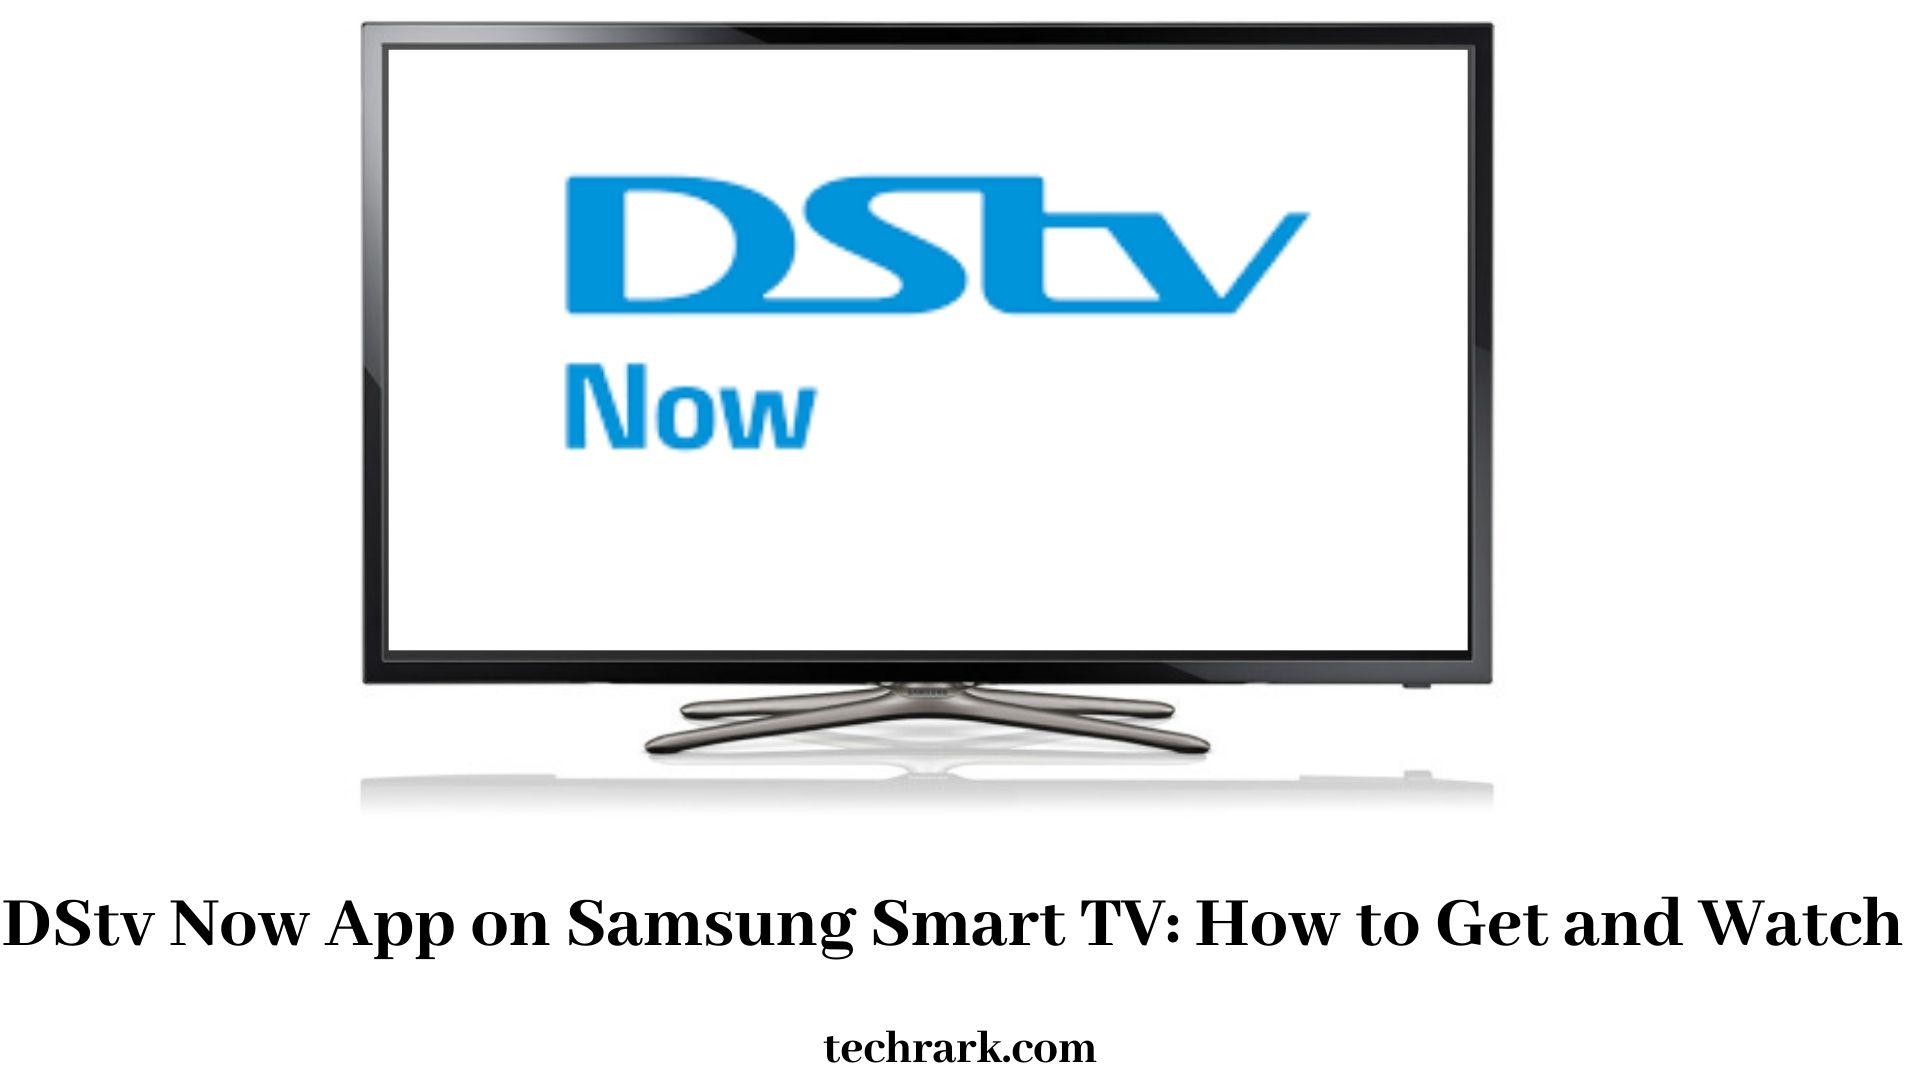 DStv Now on Samsung Smart TV